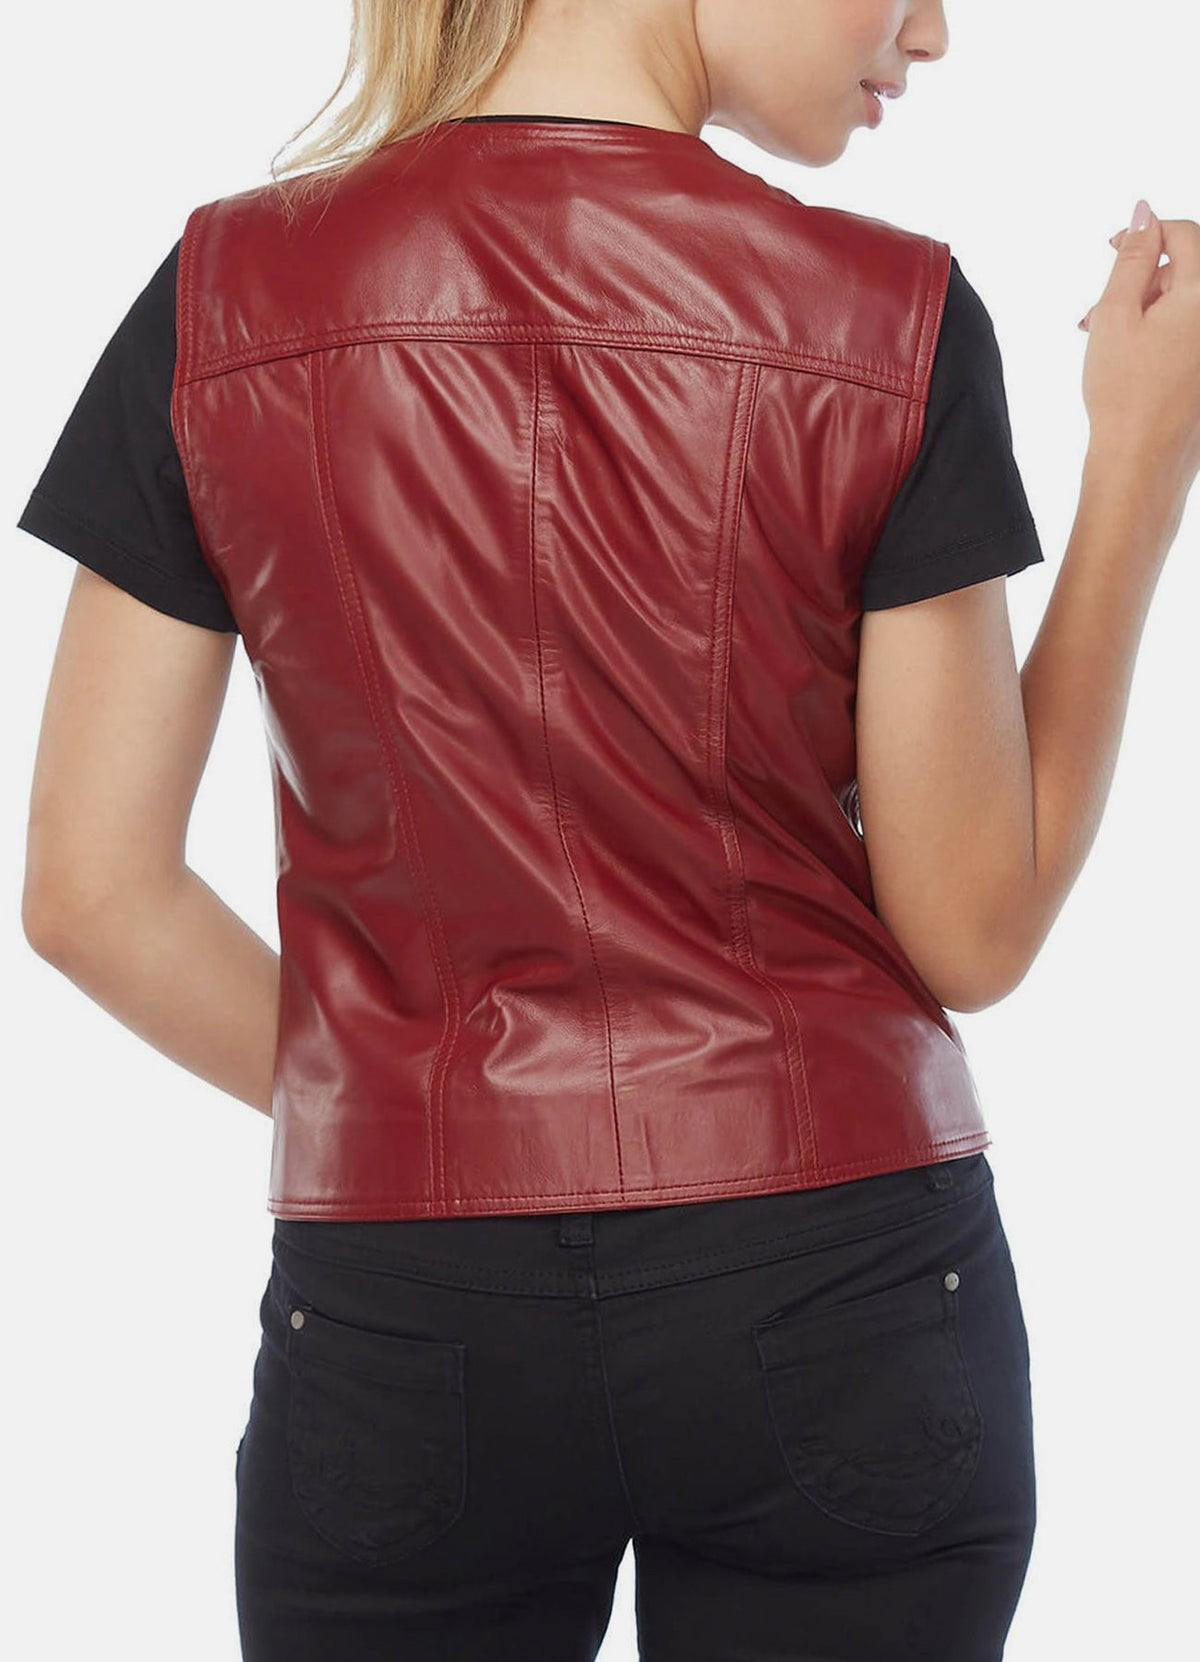 Womens Bright Red Biker Leather Vest